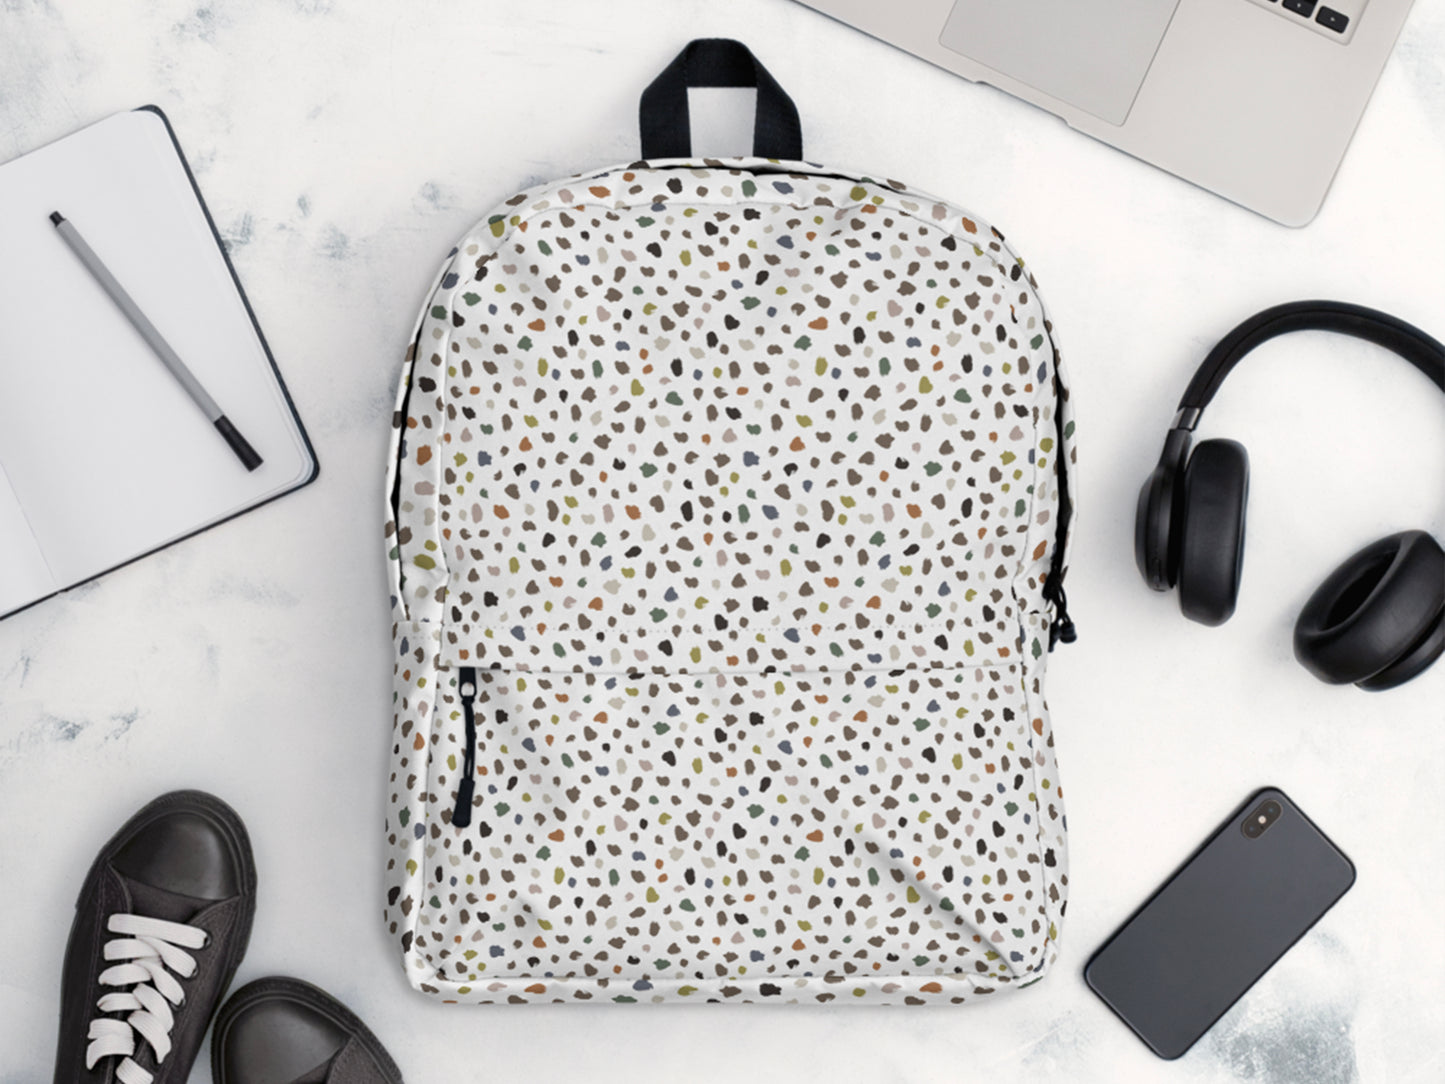 Earth Tone Dalmatian Backpack